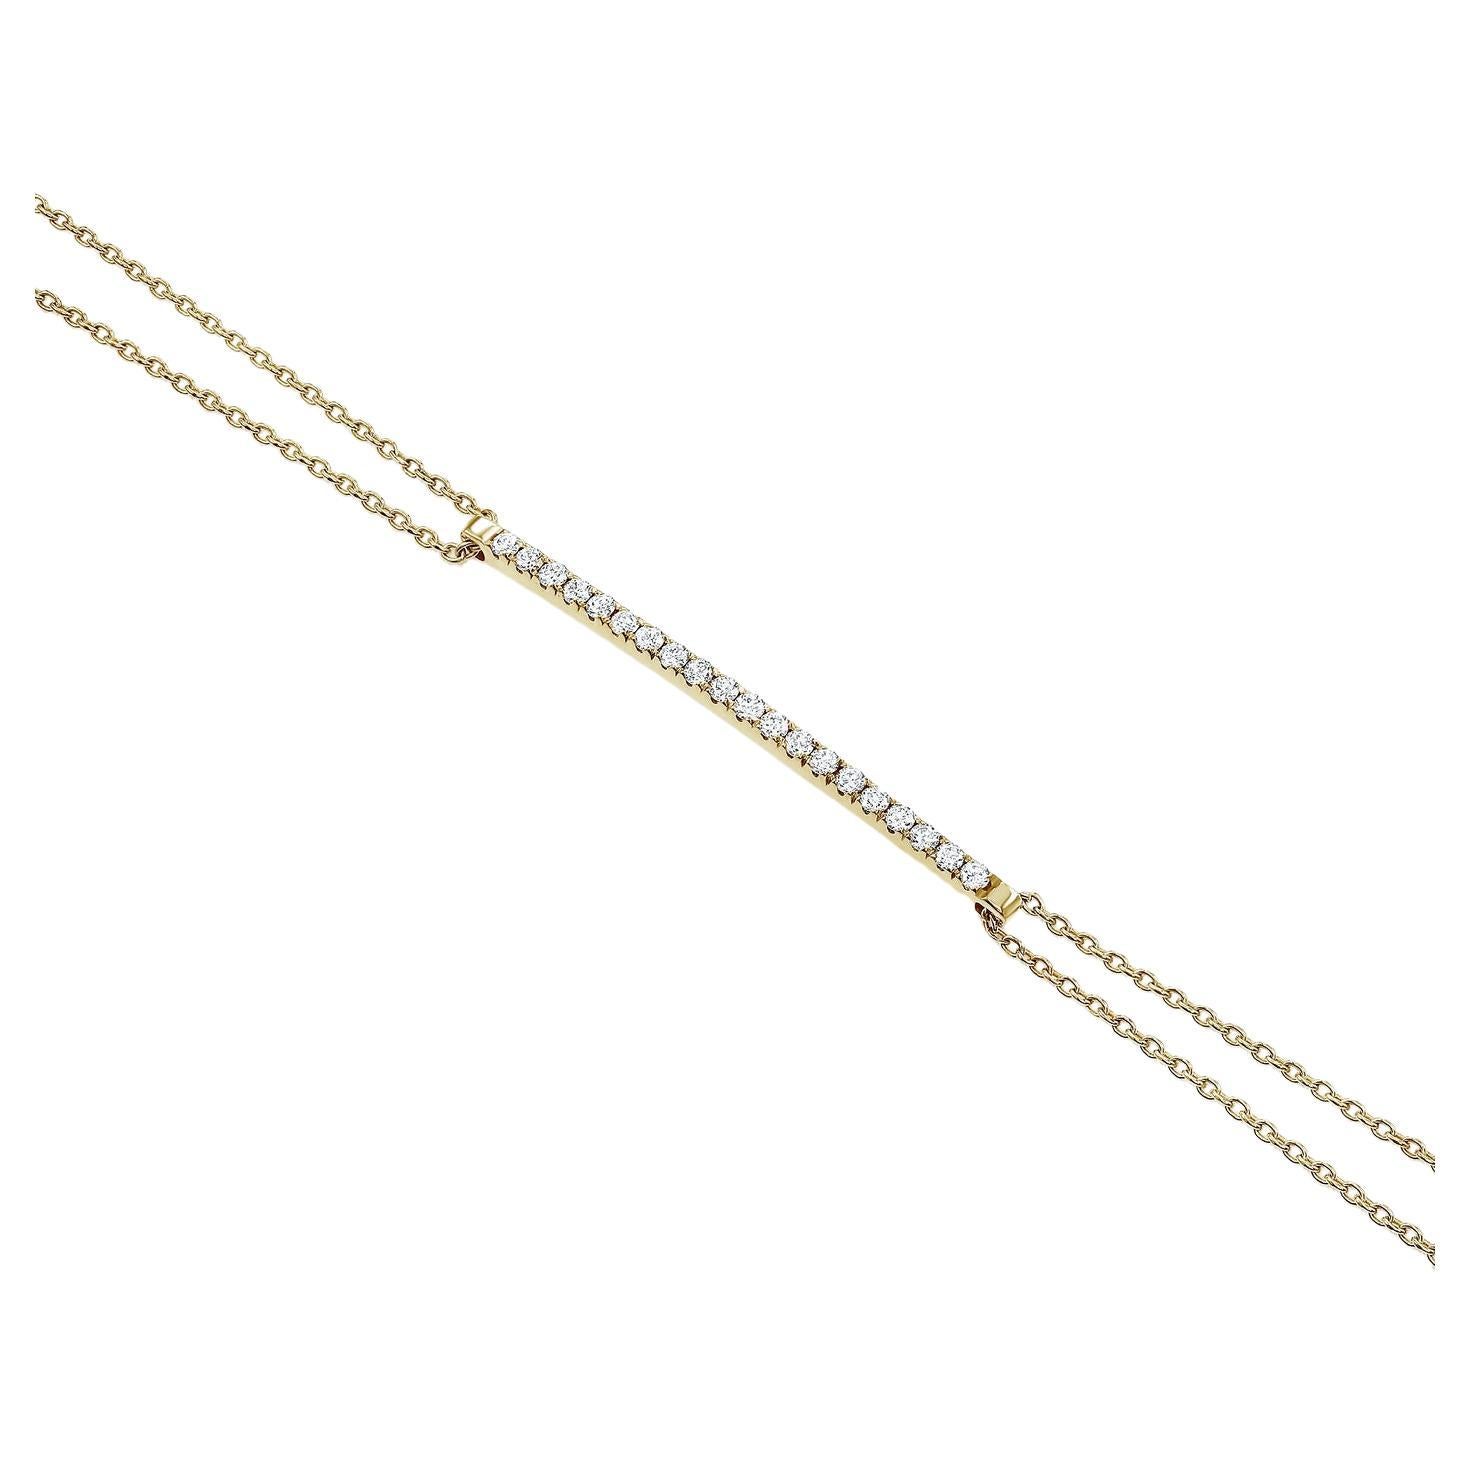 0.30 Carat Diamond Bar Double Chain Bracelet in 14K Yellow Gold, Shlomit Rogel